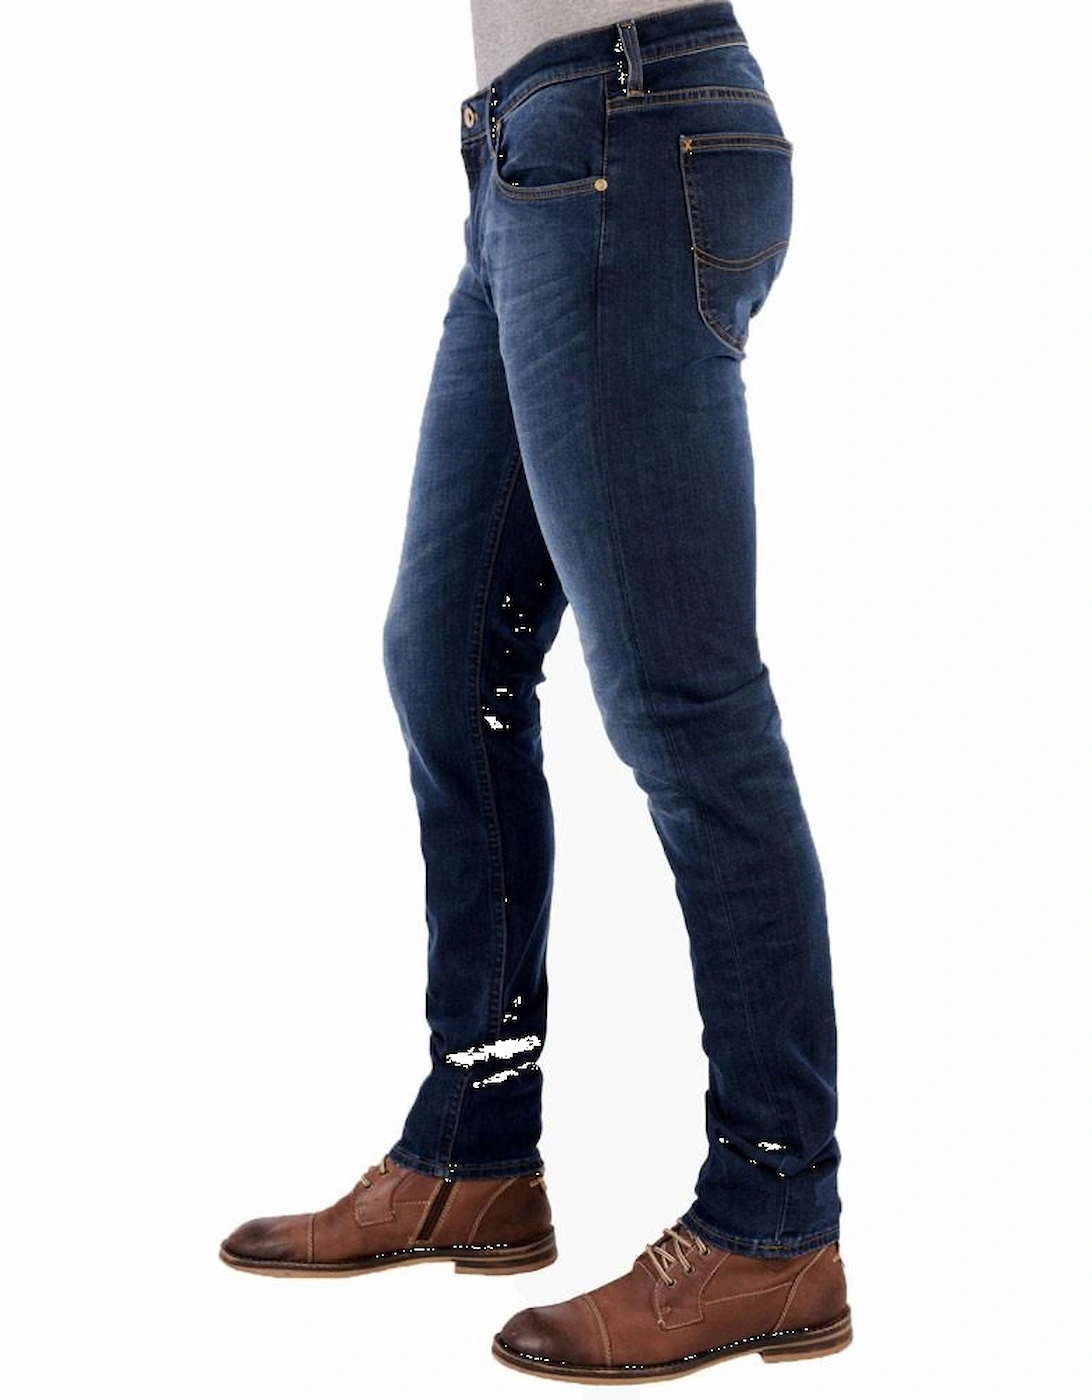 Luke - Slim Tapered Fit Jeans - True Authentic Blue